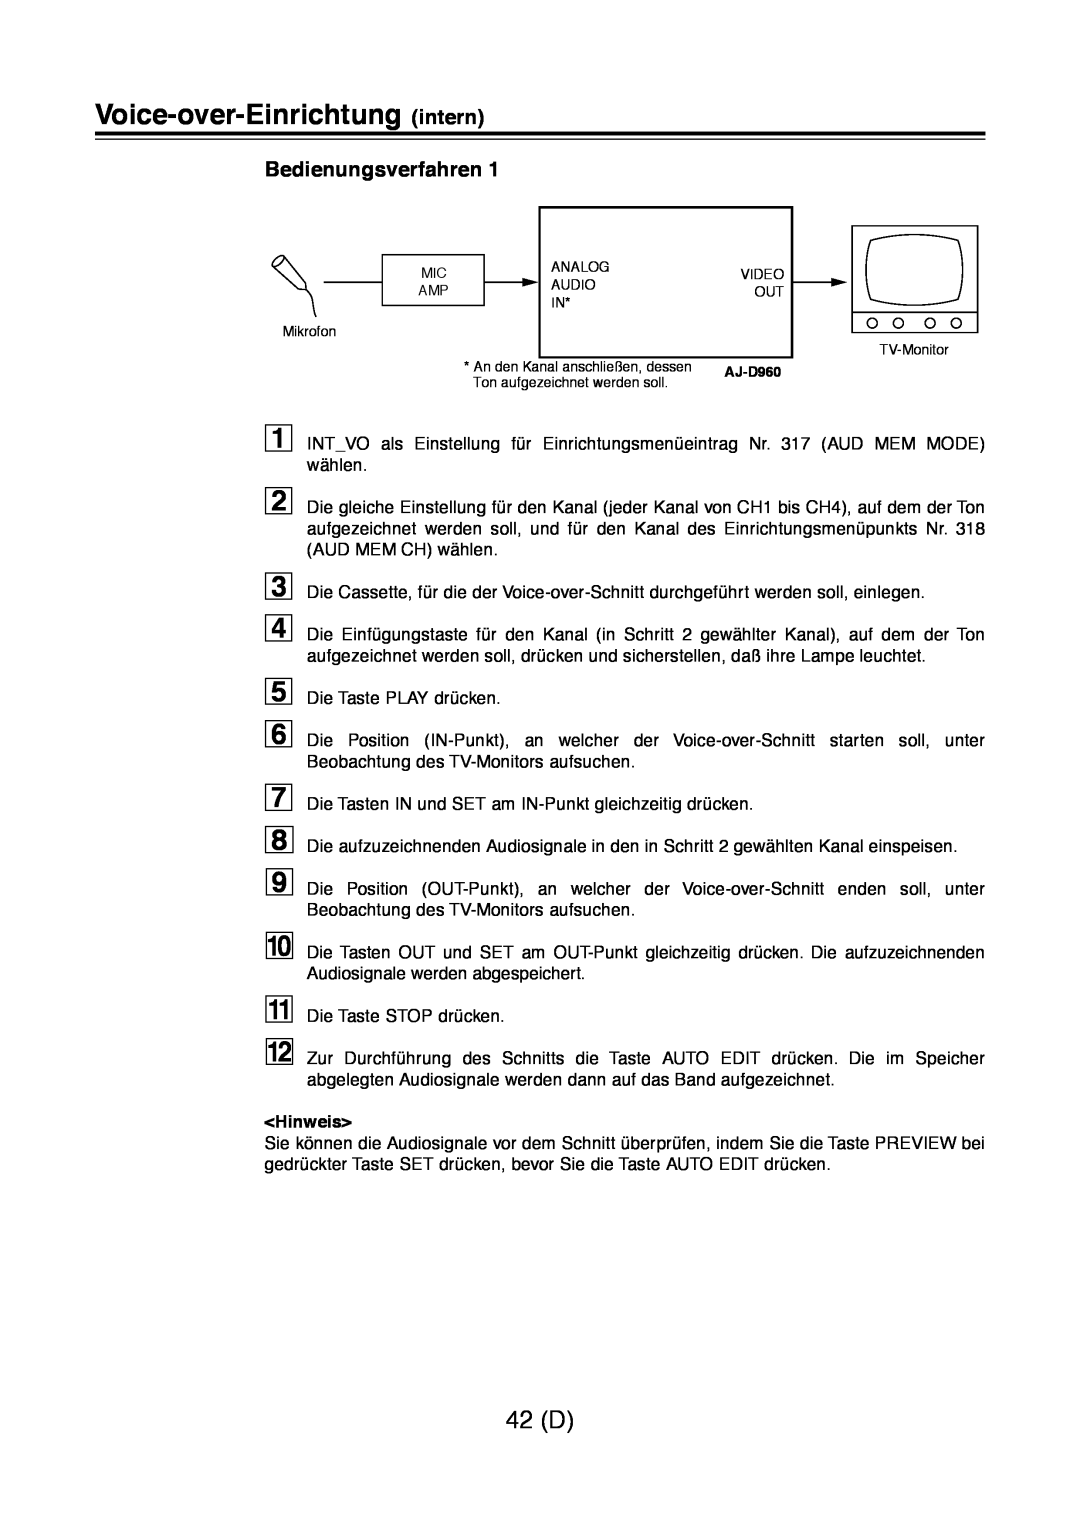 Panasonic AJ-D960 operating instructions Voice-over-Einrichtung intern, 42 D, Bedienungsverfahren, Hinweis 